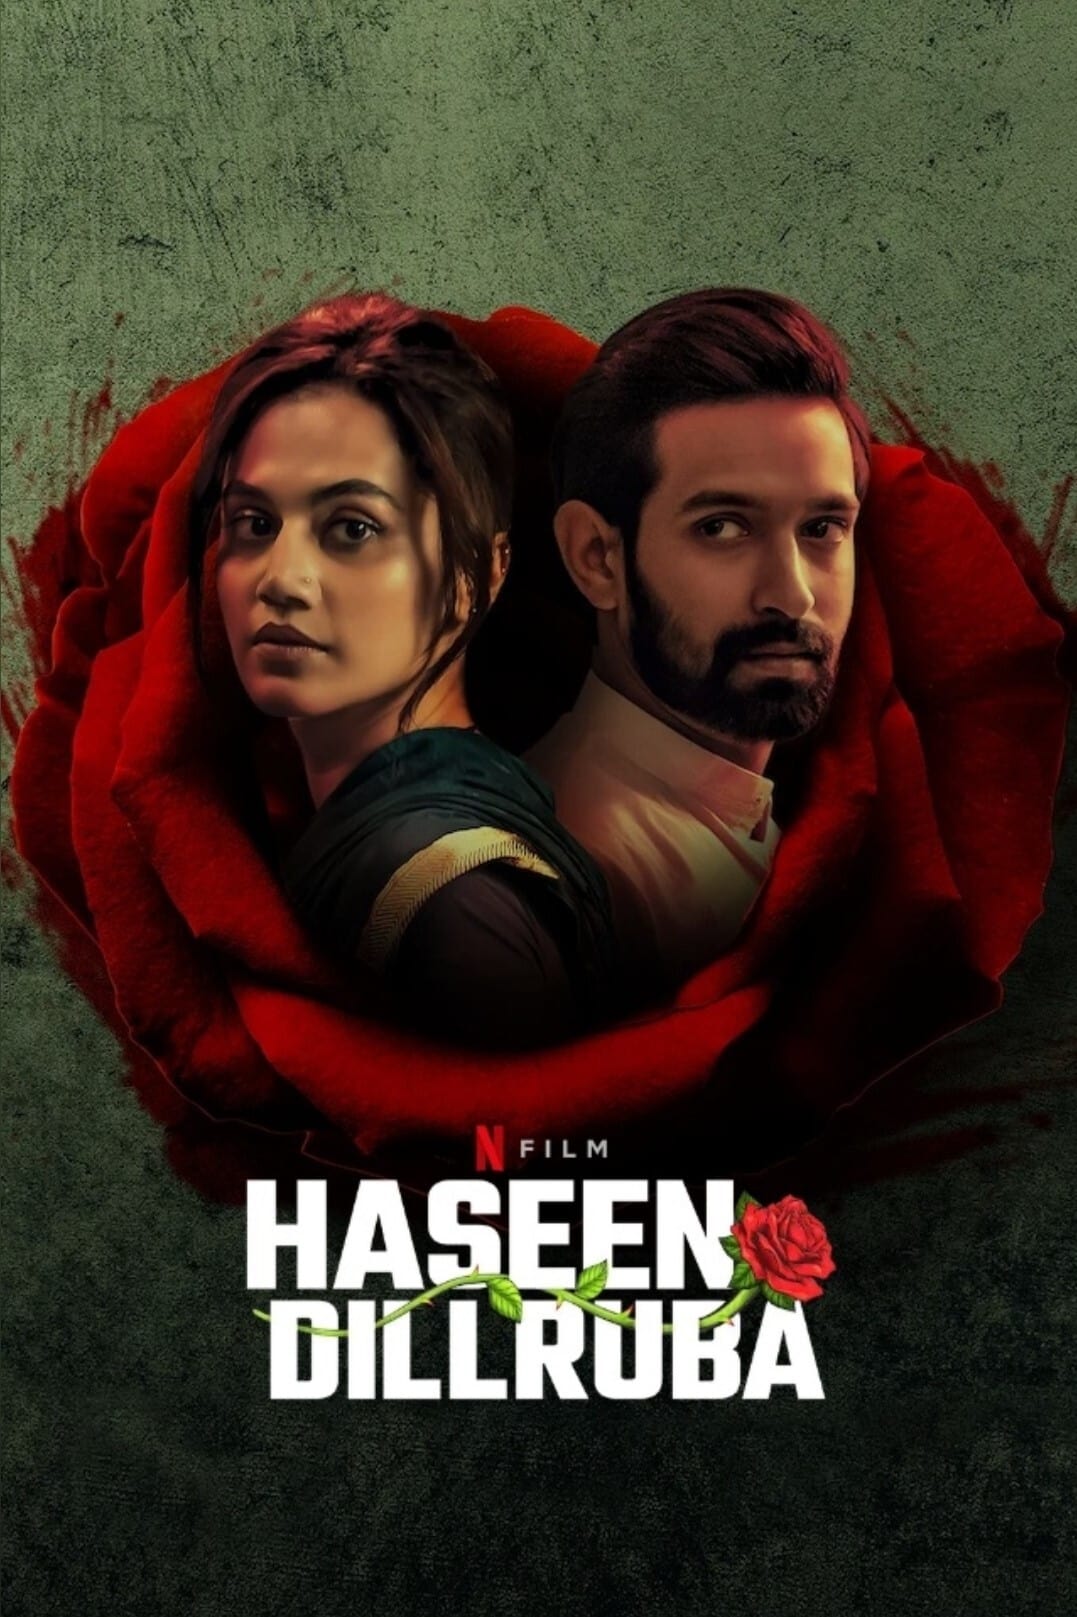 Poster for the movie "Haseen Dillruba"